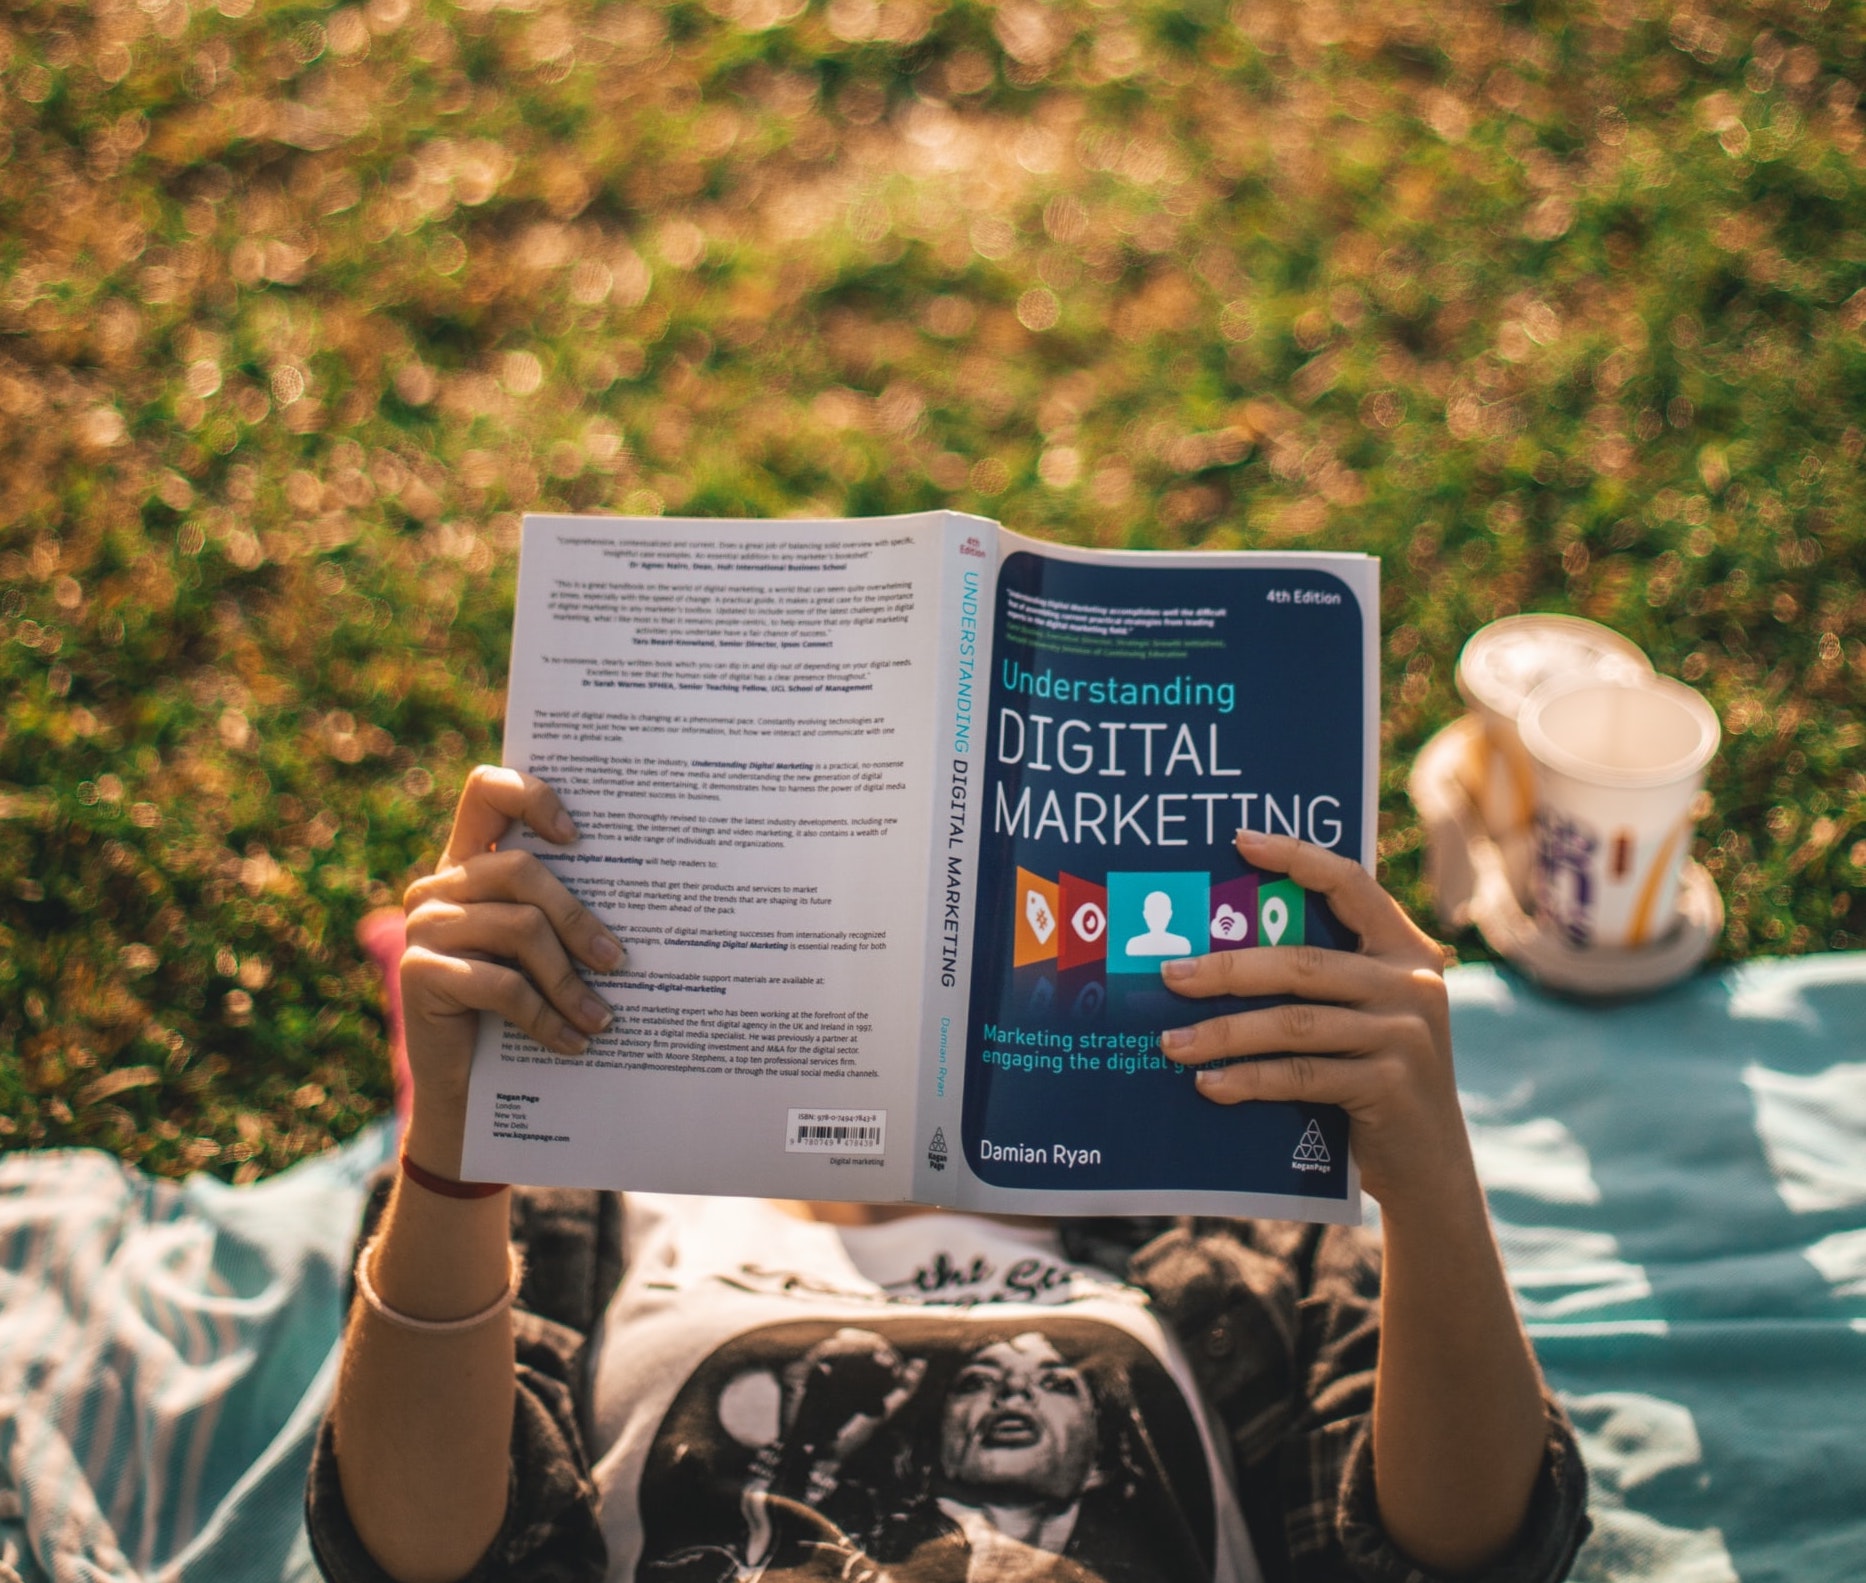 Woman reading a book titled “Digital Marketing.”